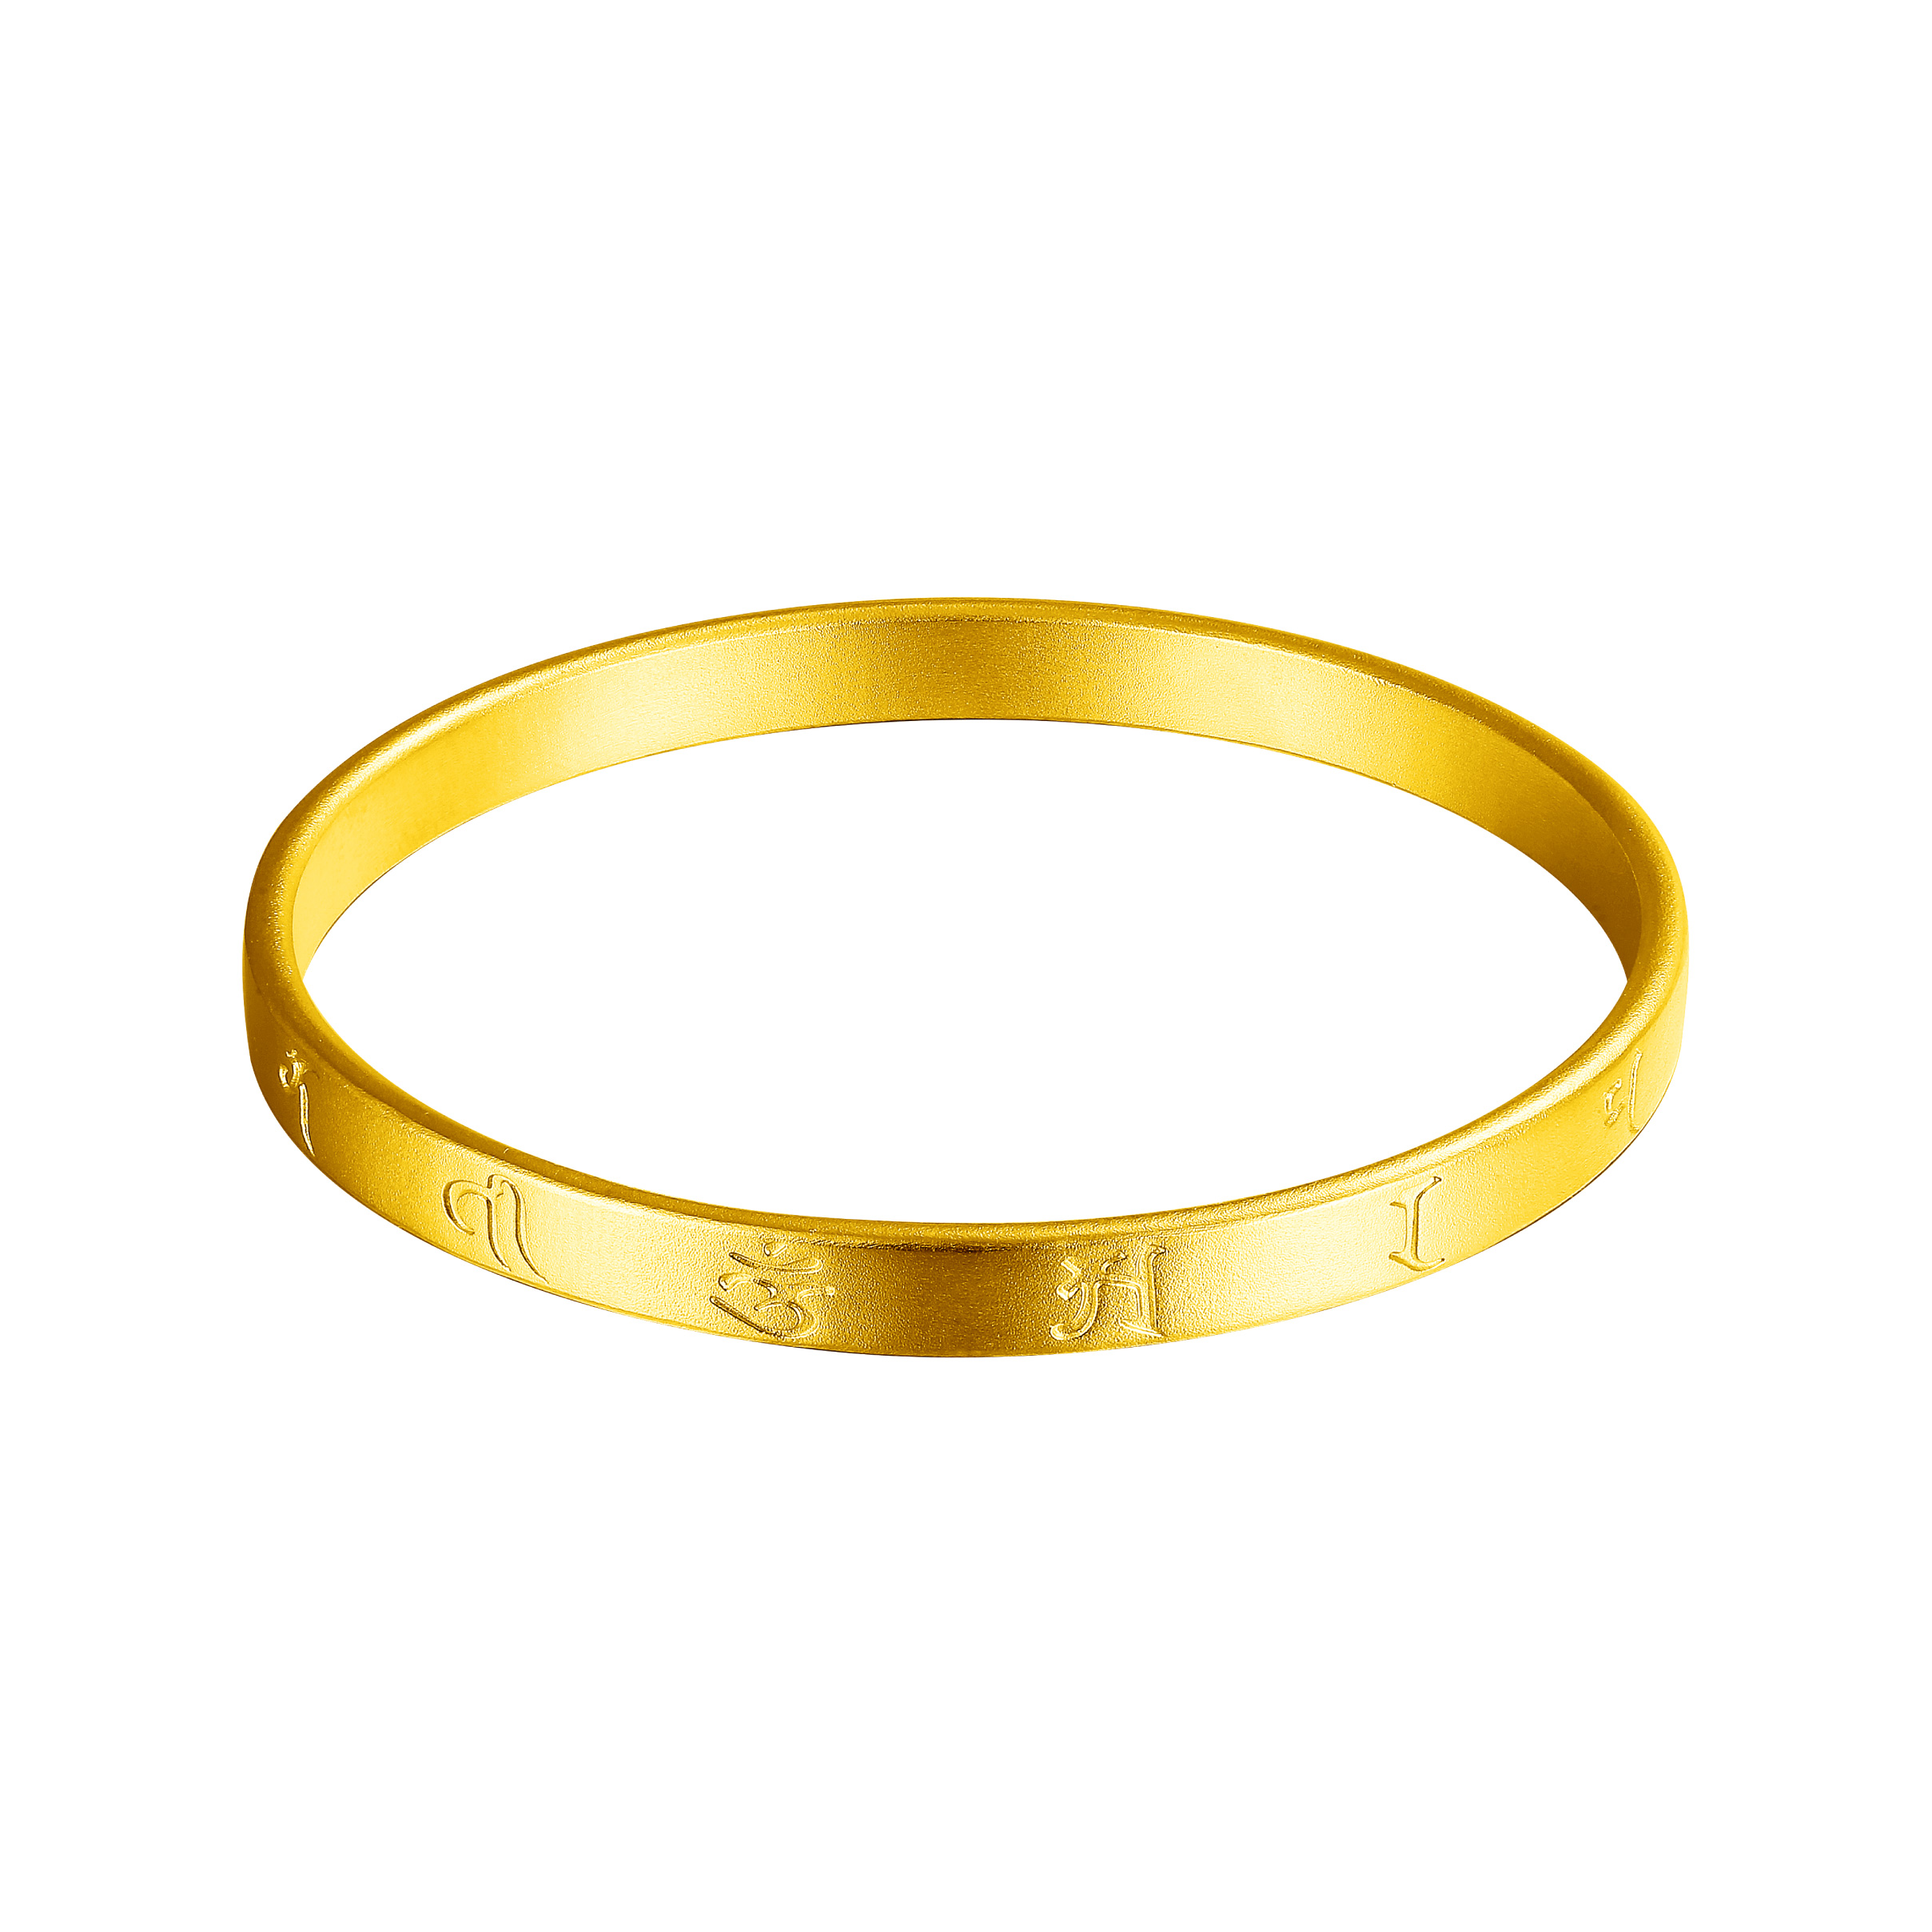 Antique Gold「佑福」Gold Bracelet 